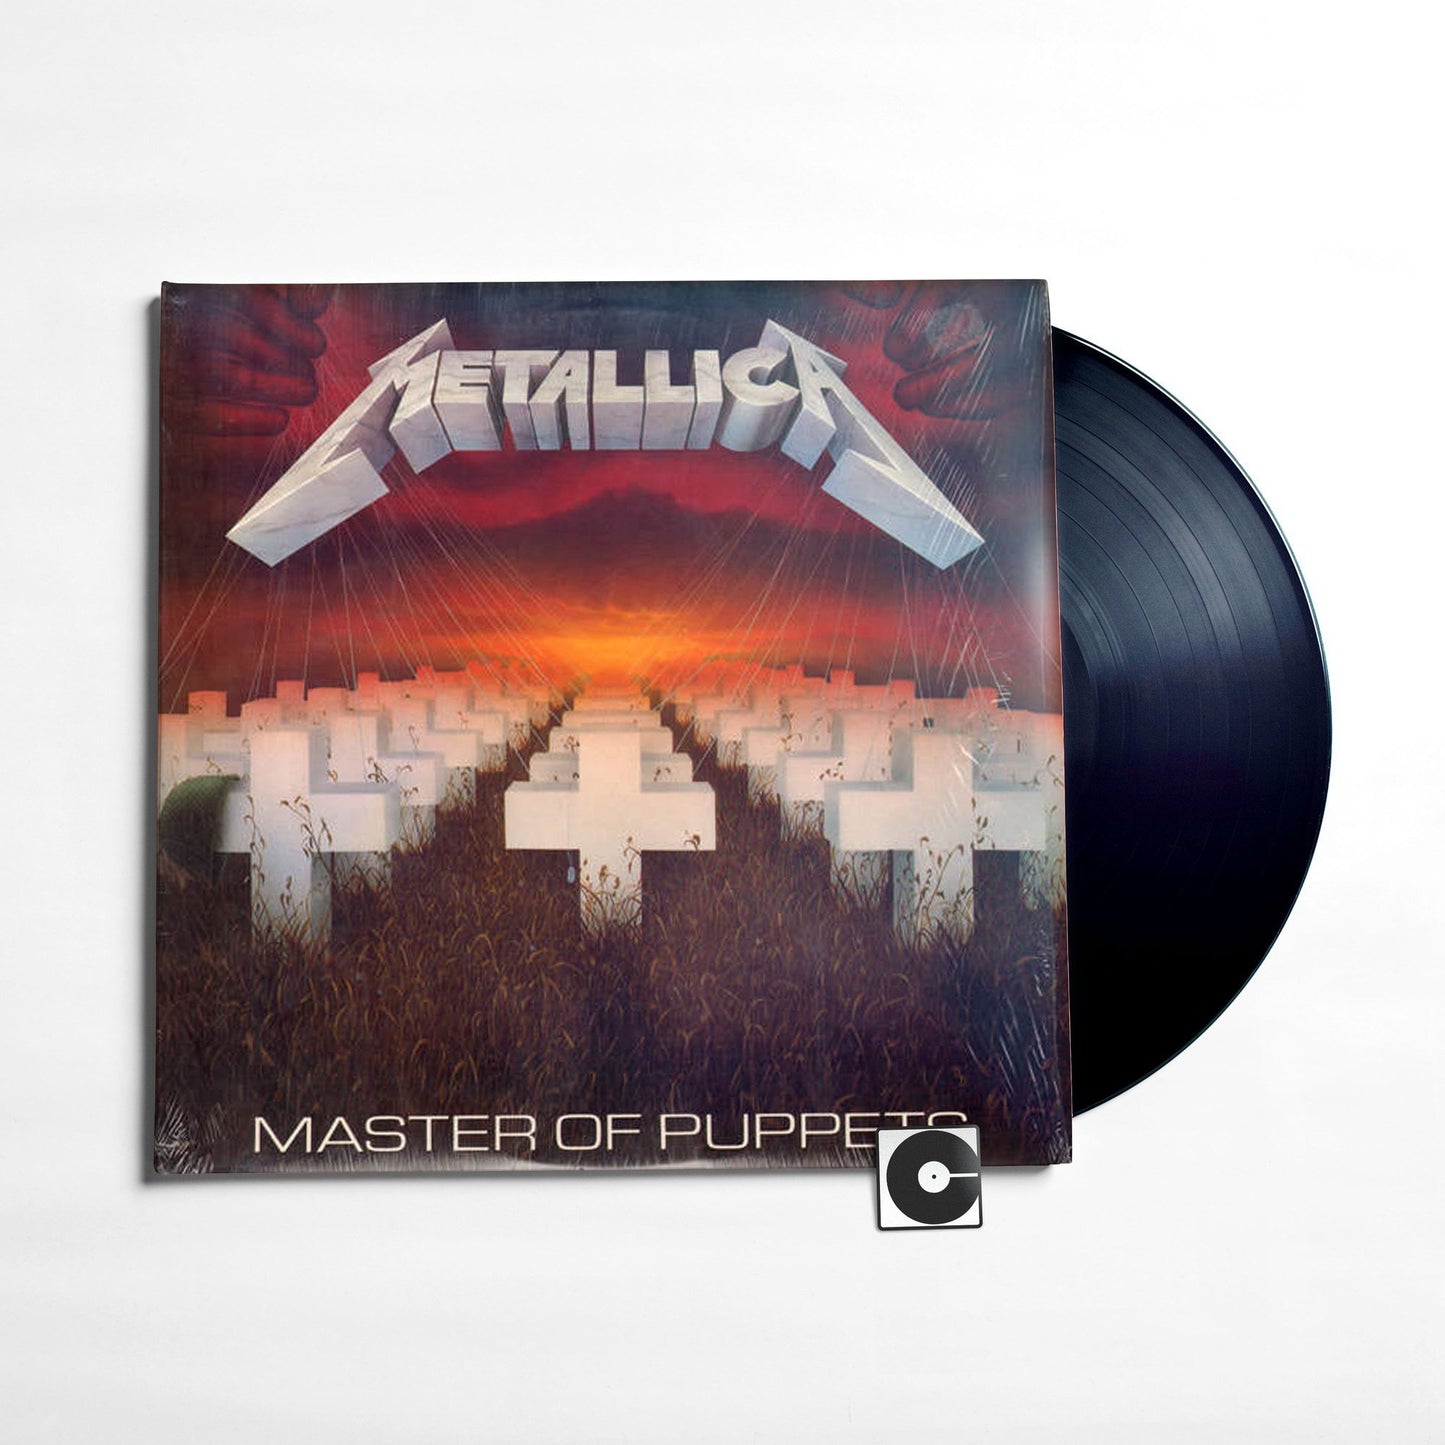 Metallica - "Master Of Puppets"